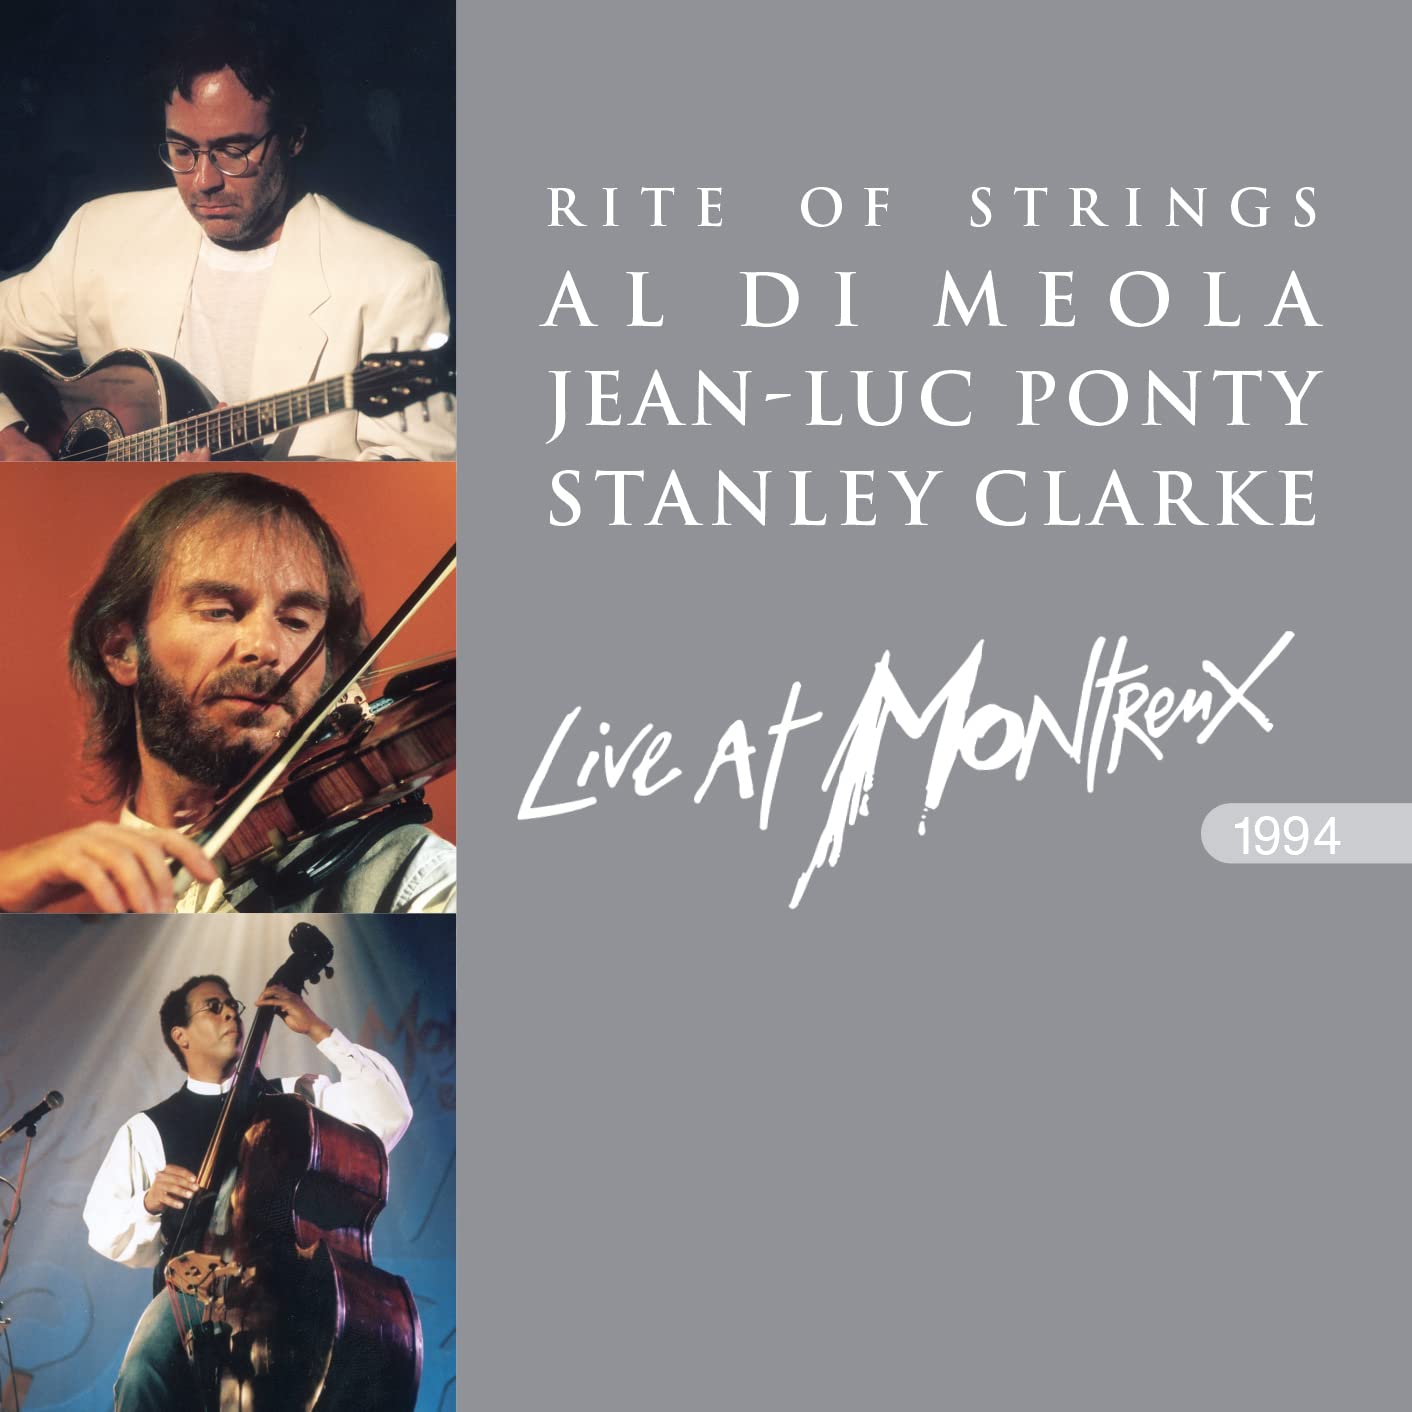 AL DI MEOLA - Al DiMeola / Jean-Luc Ponty / Stanley Clarke : Rite of Strings - Live at Montreux 1994 cover 